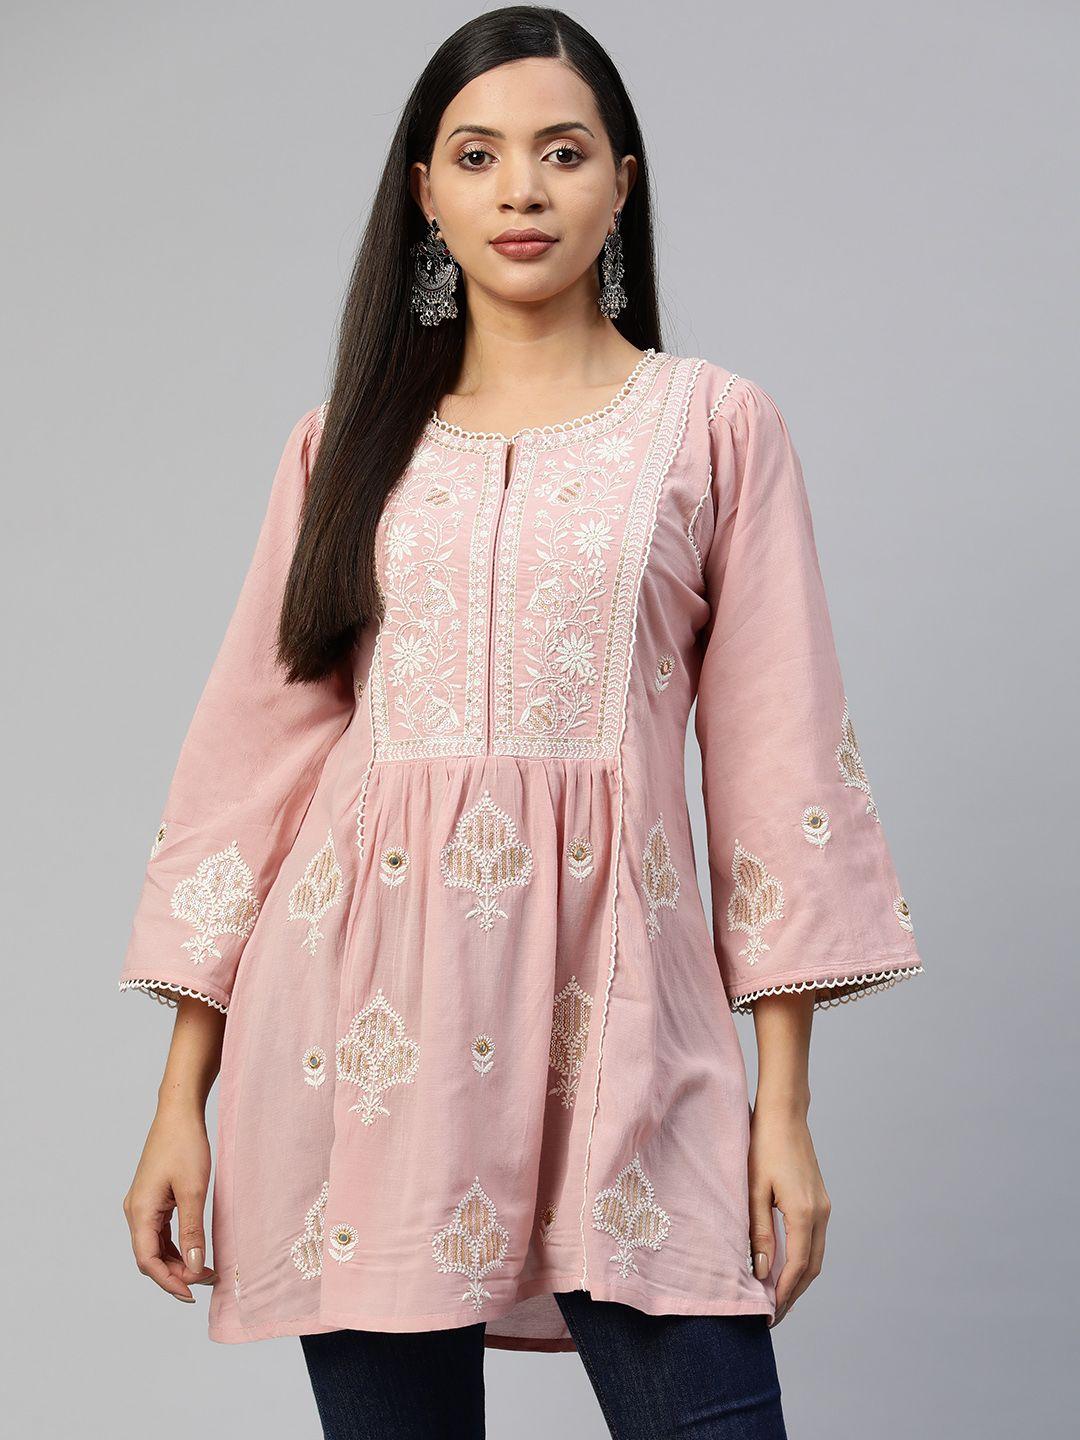 nayam-by-lakshita-embroidered-ethnic-tunic